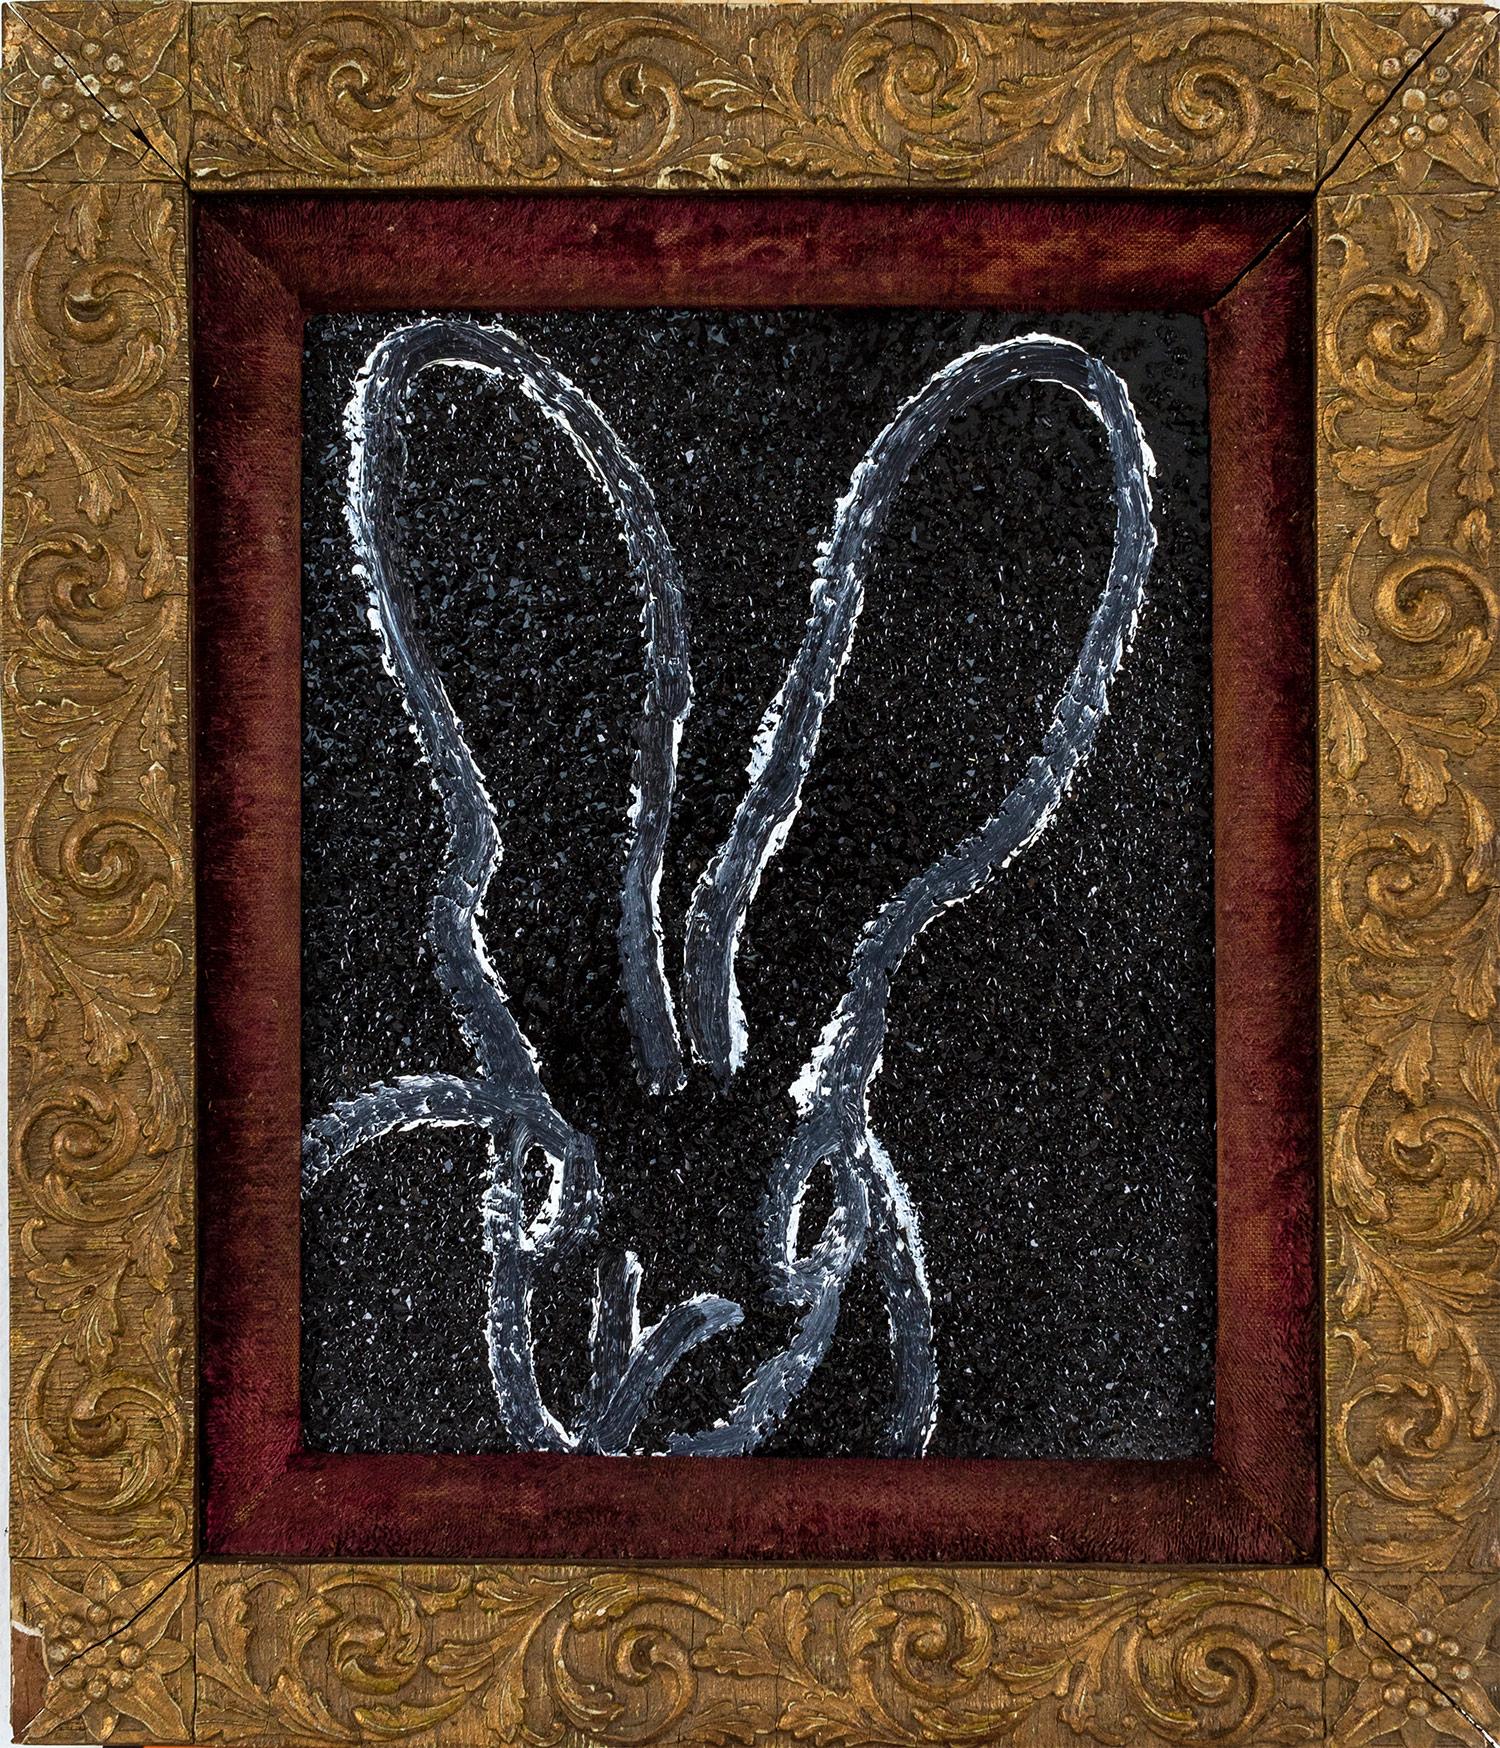 Hunt Slonem Abstract Painting - "Black Diamond" (Bunny on Black Diamond Dust) Oil Painting on Wood Panel